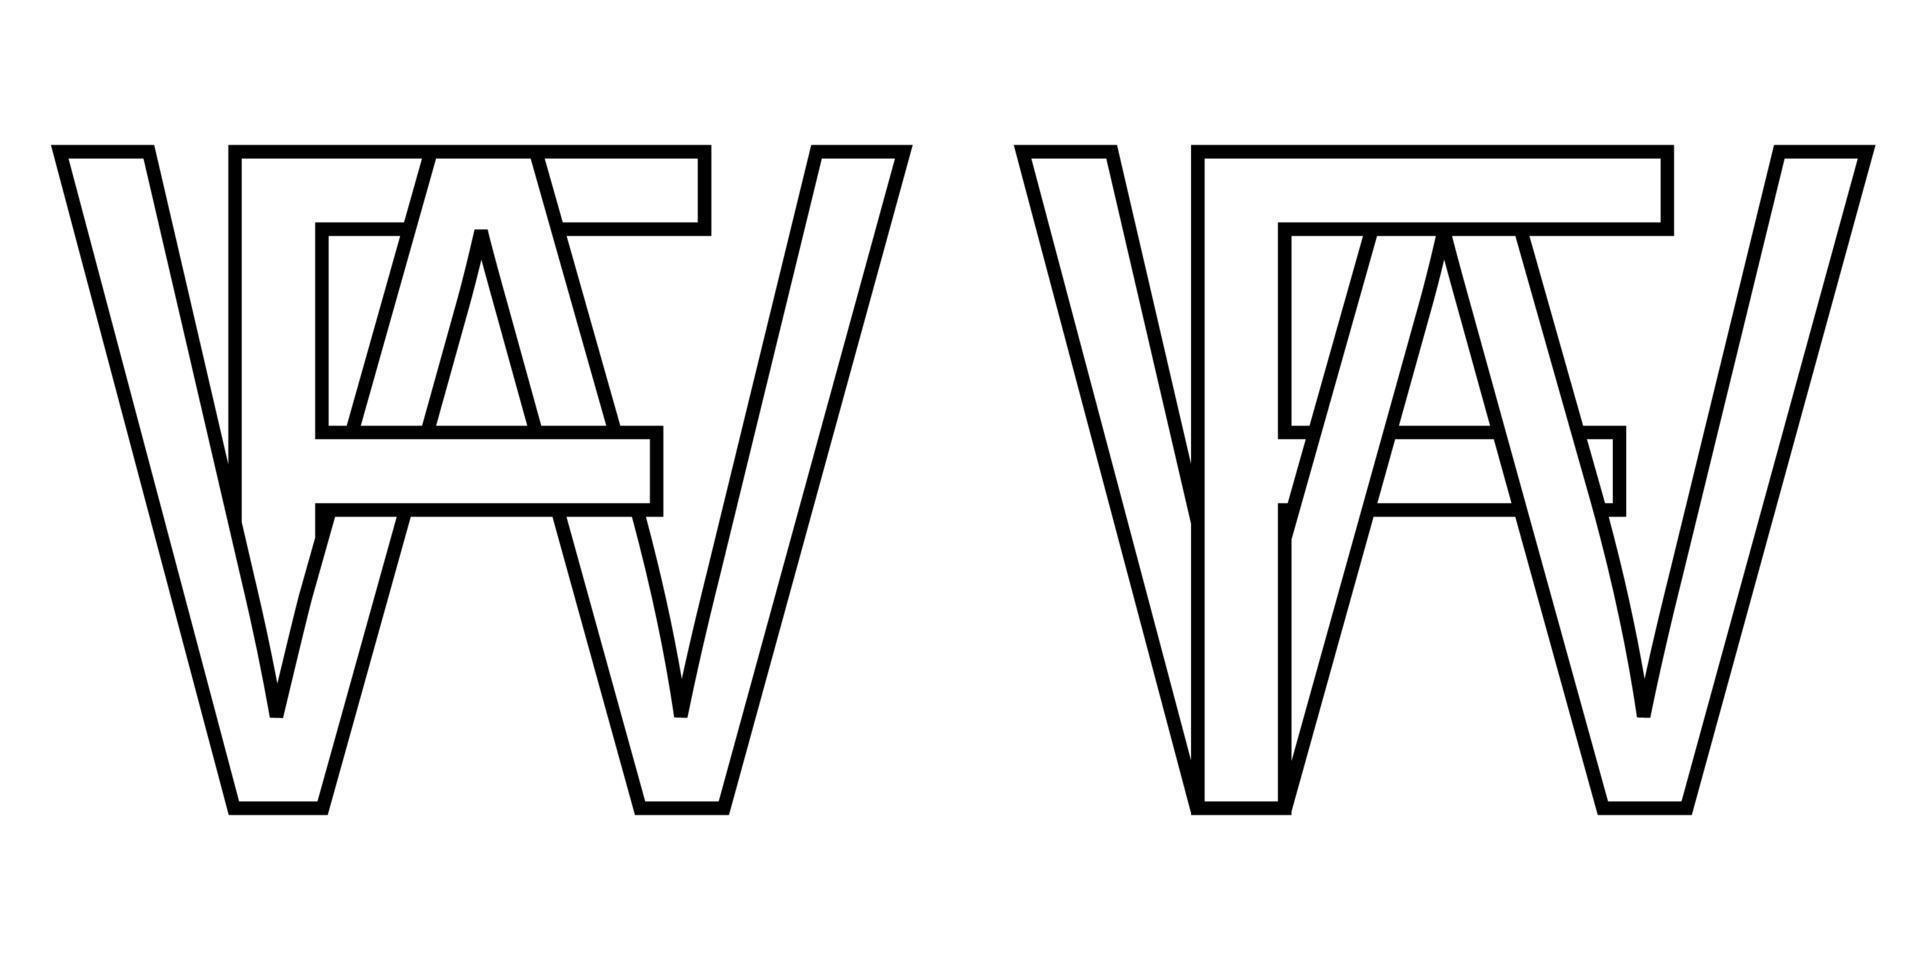 logo firmar adelante, wf icono firmar entrelazado letras w, F vector logo wf, fw primero capital letras modelo alfabeto w F